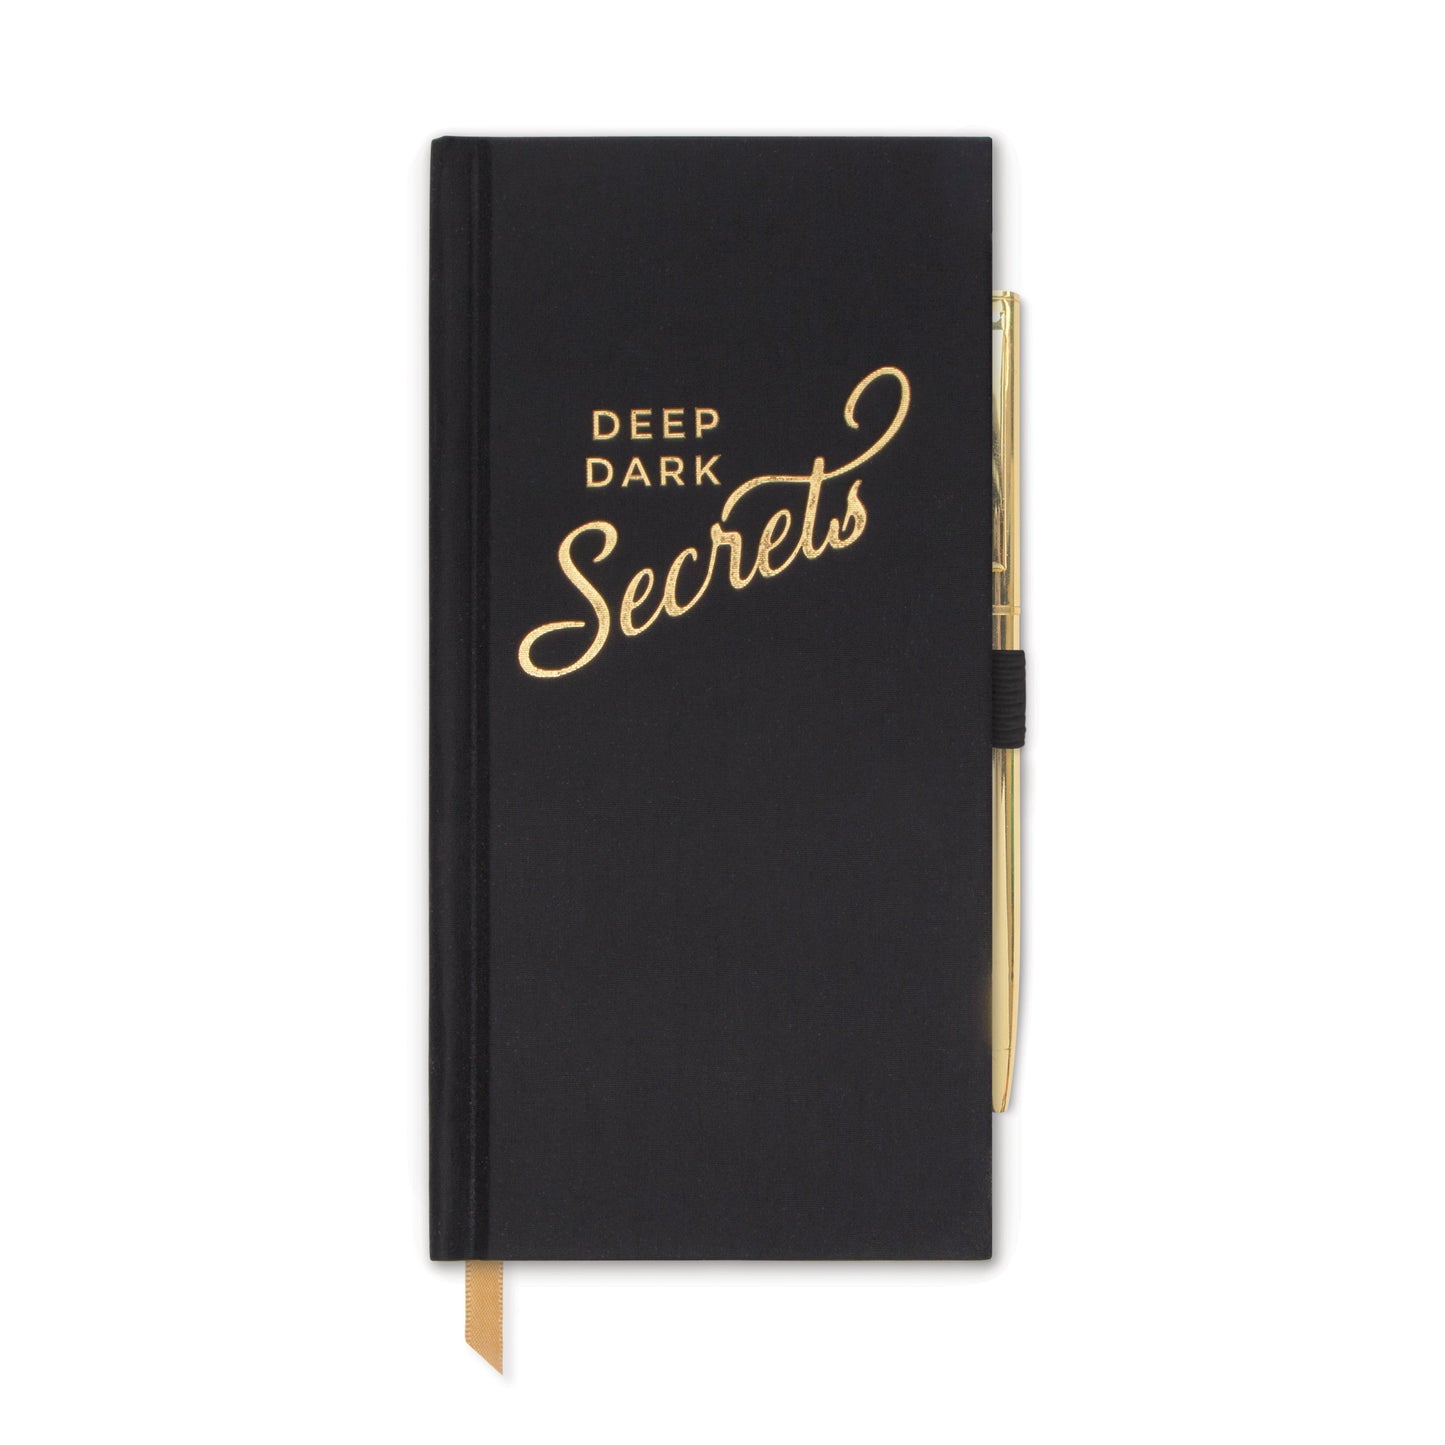 Skinny Journal With Pen - "Deep Dark Secrets"